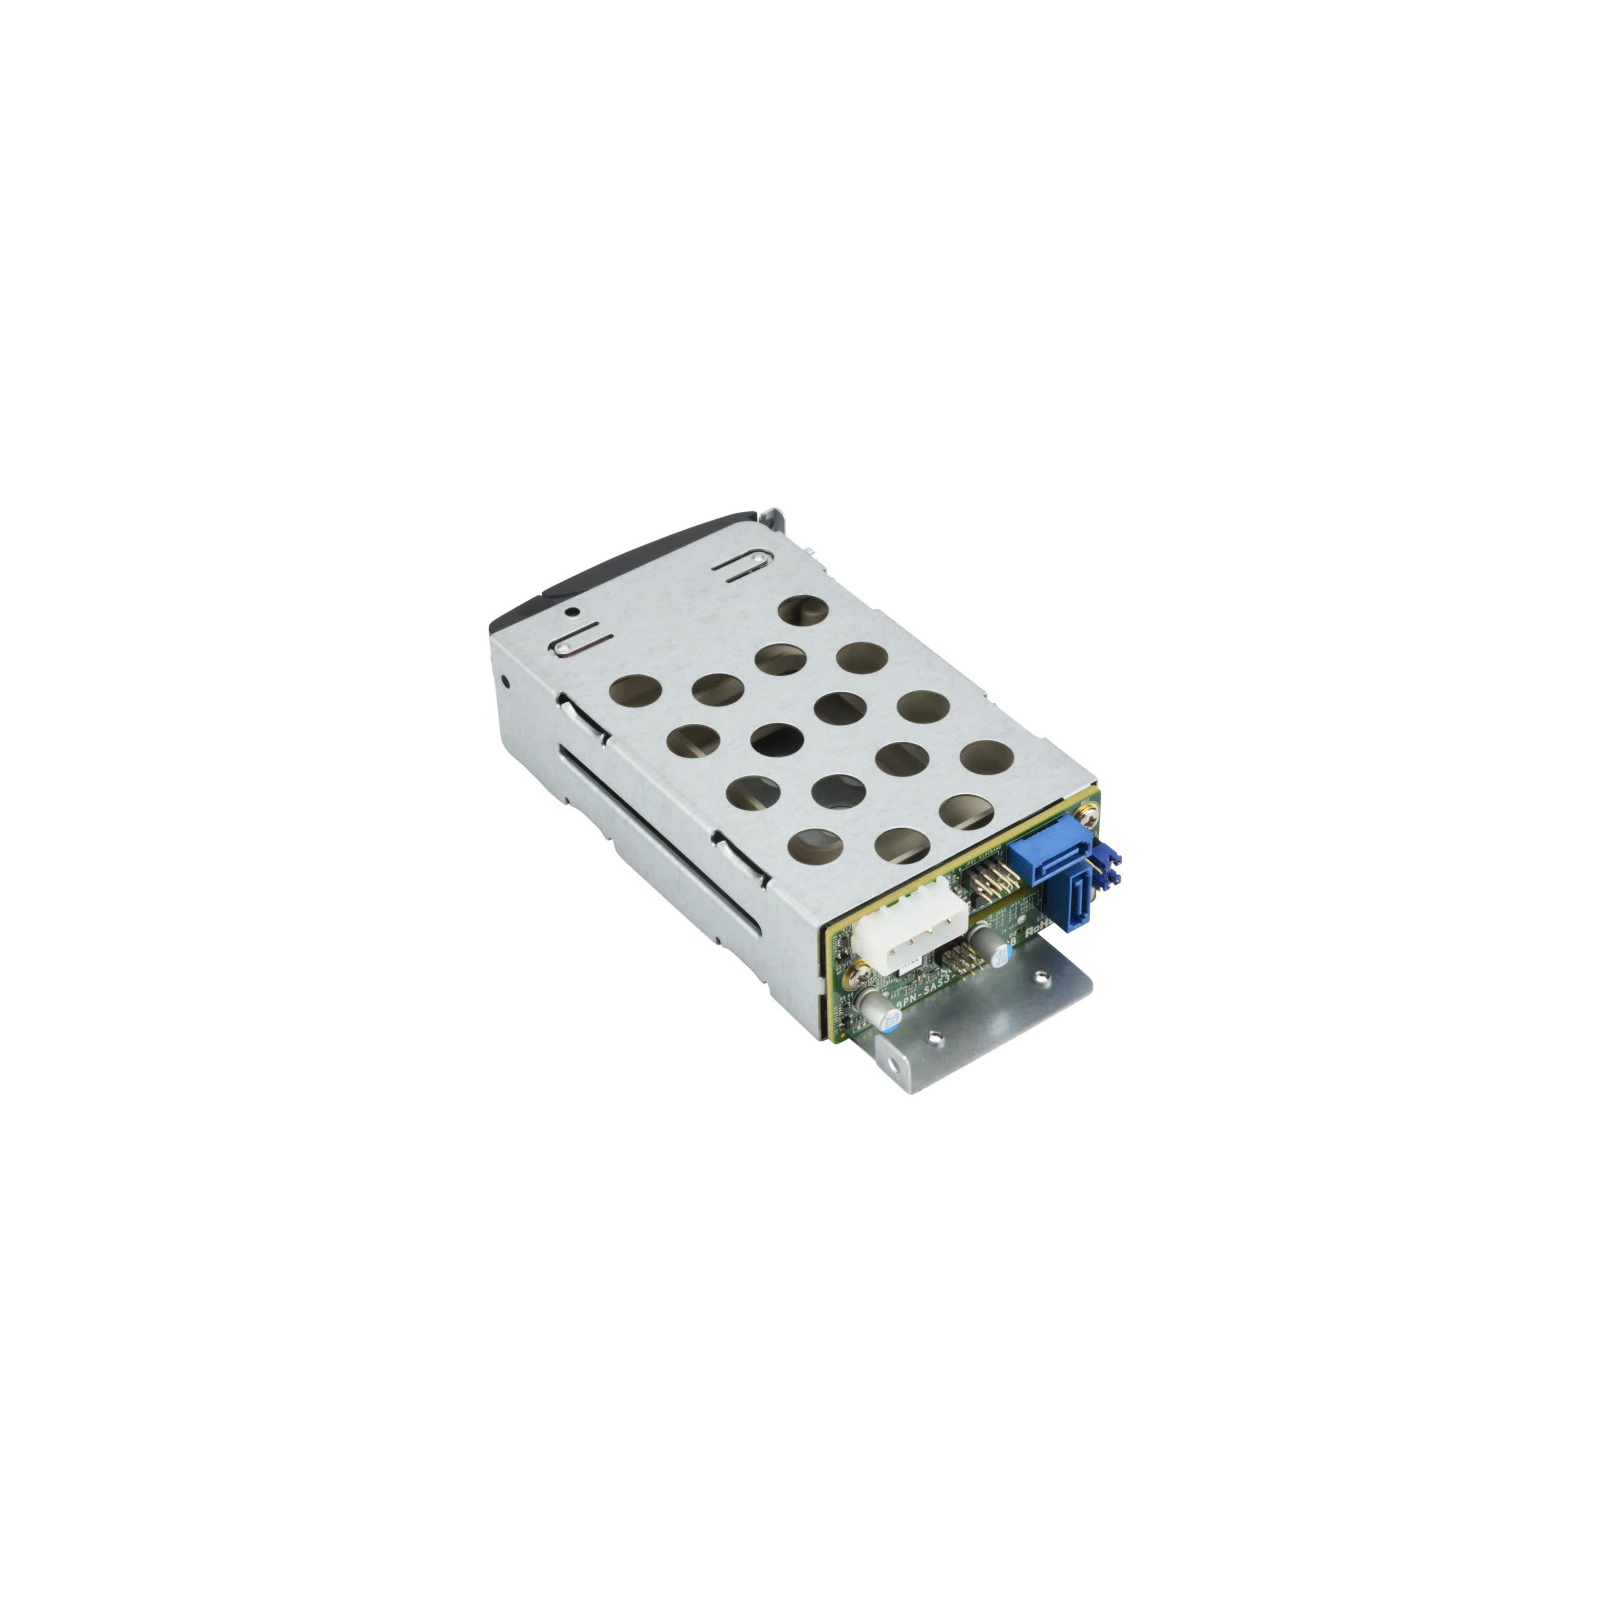 Фрейм-переходник Supermicro Rear drive hot-swap bay kit for 2x2.5" drives (MCP-220-82616-0N) изображение 2